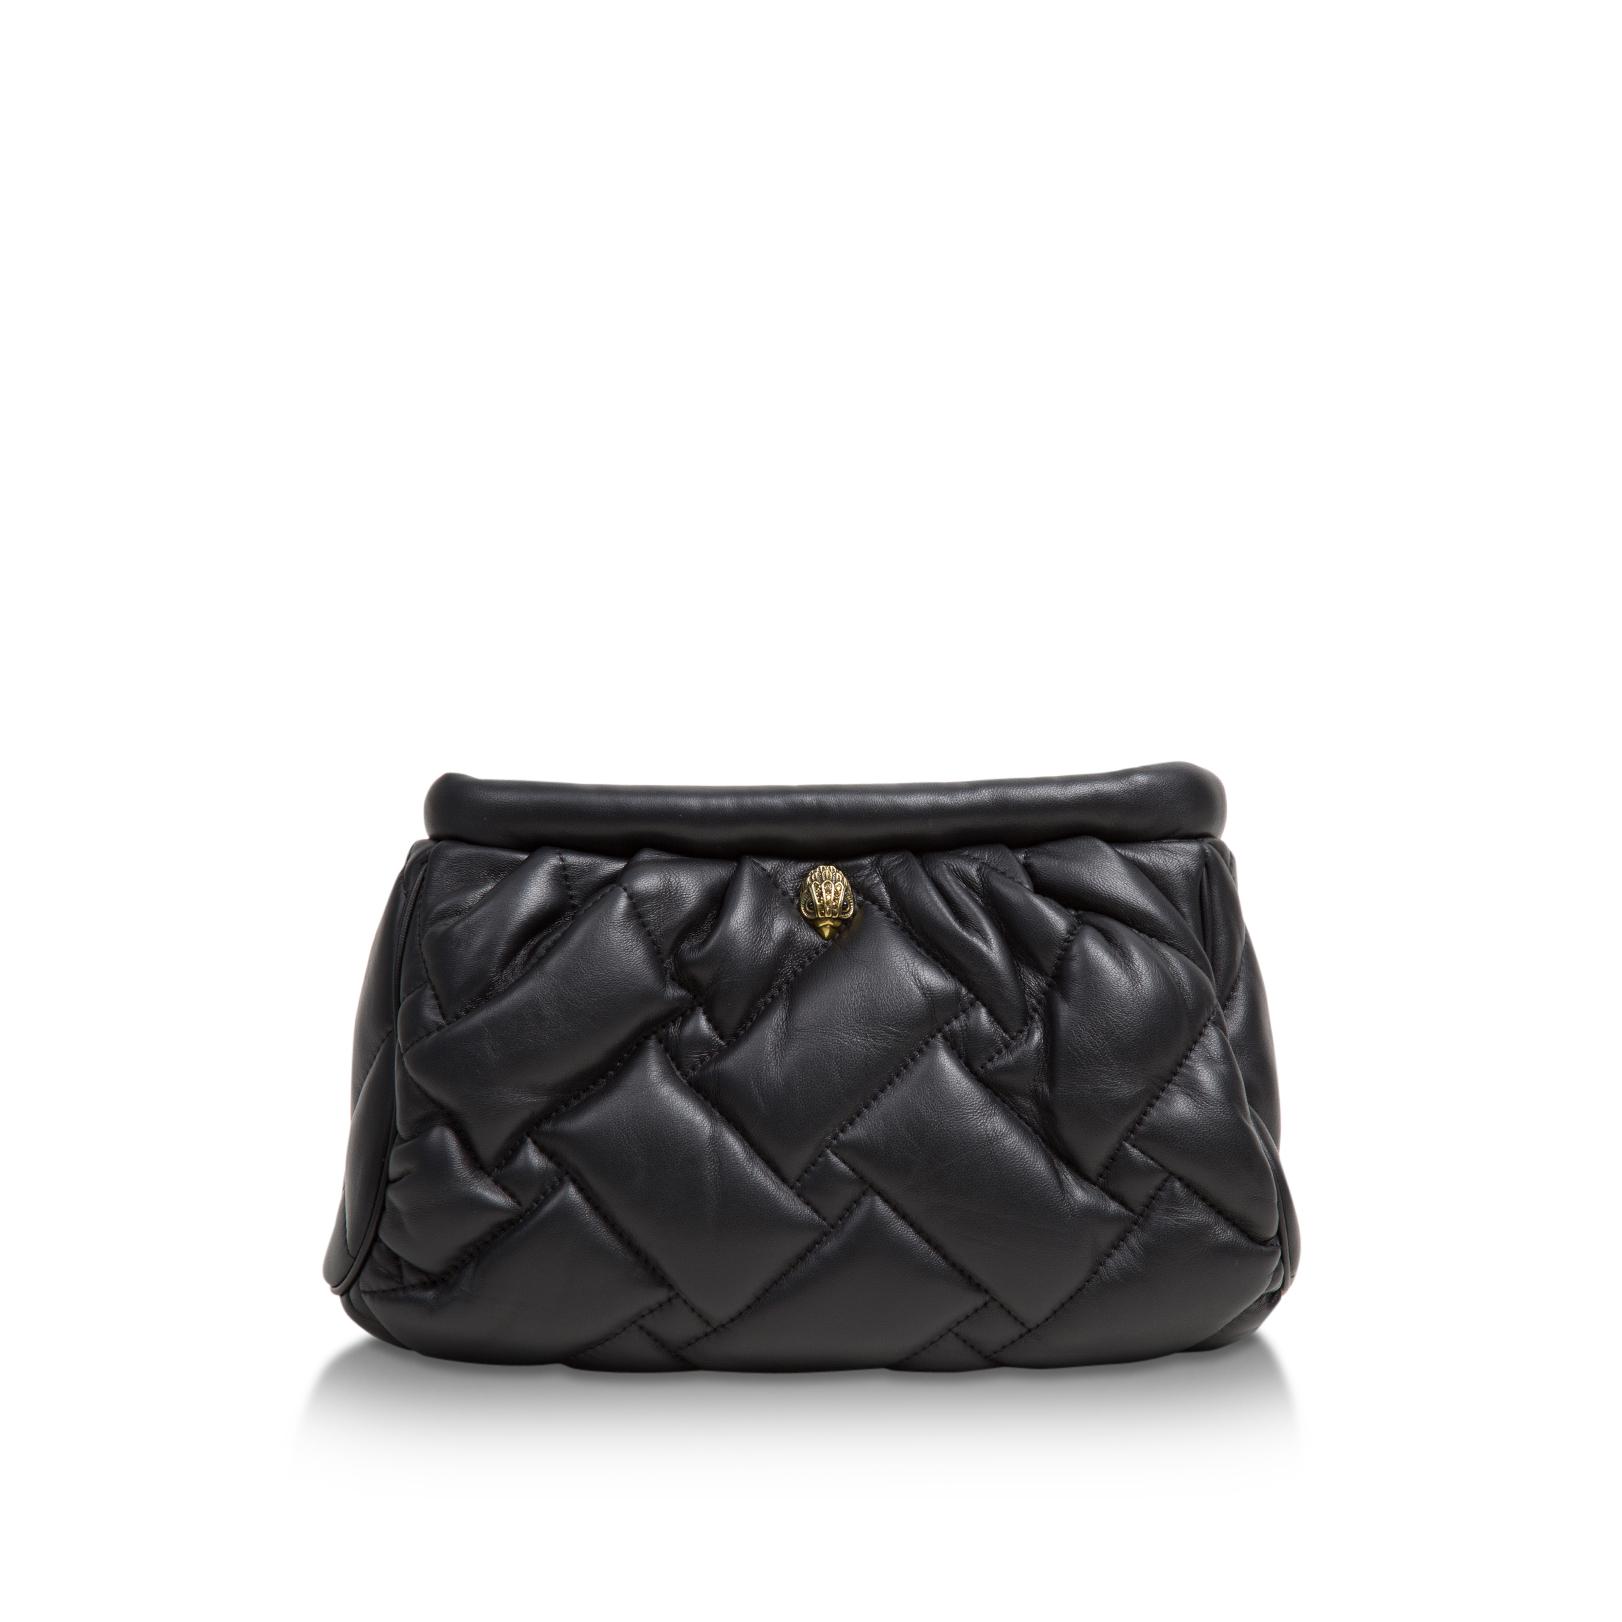 KENSINGTON SOFT CLUTCH Black Leather Quilted Clutch Bag by KURT GEIGER ...